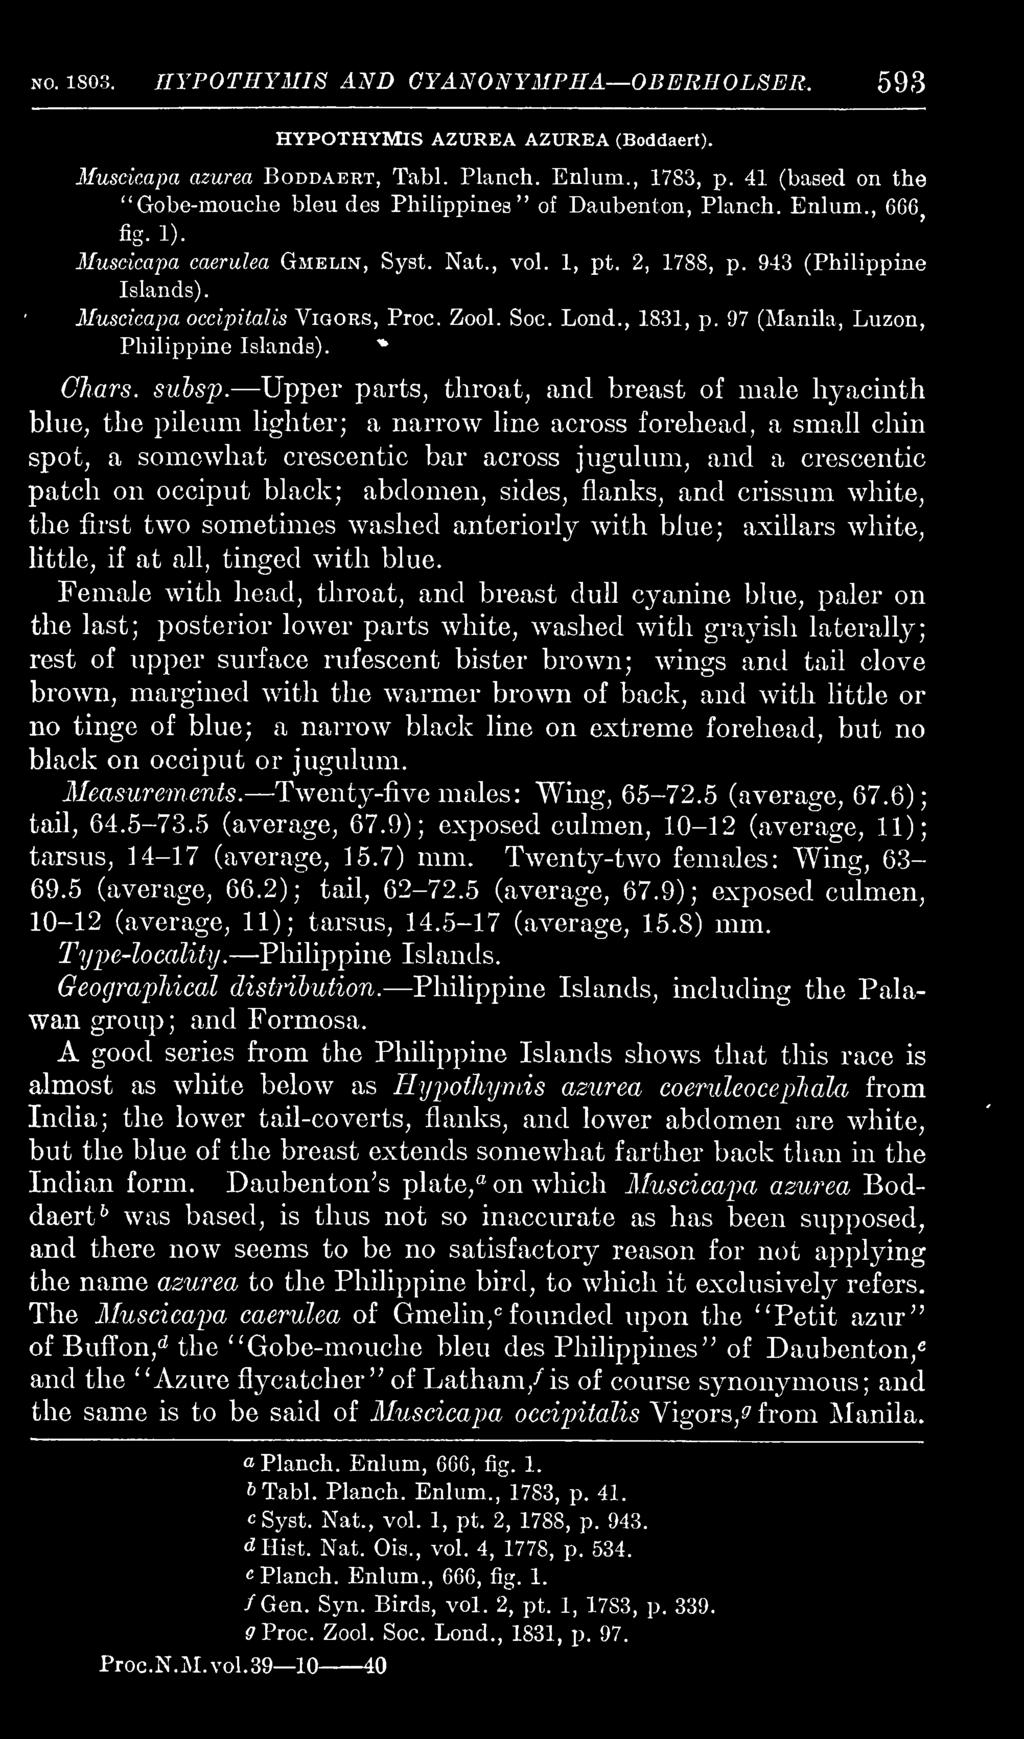 Muscicapa occipitalis Vigors, Proc. Zool. Soc. Lond., 1831, p. 97 (Manila, Luzon, Philippine Islands). * Chars, suhsp.